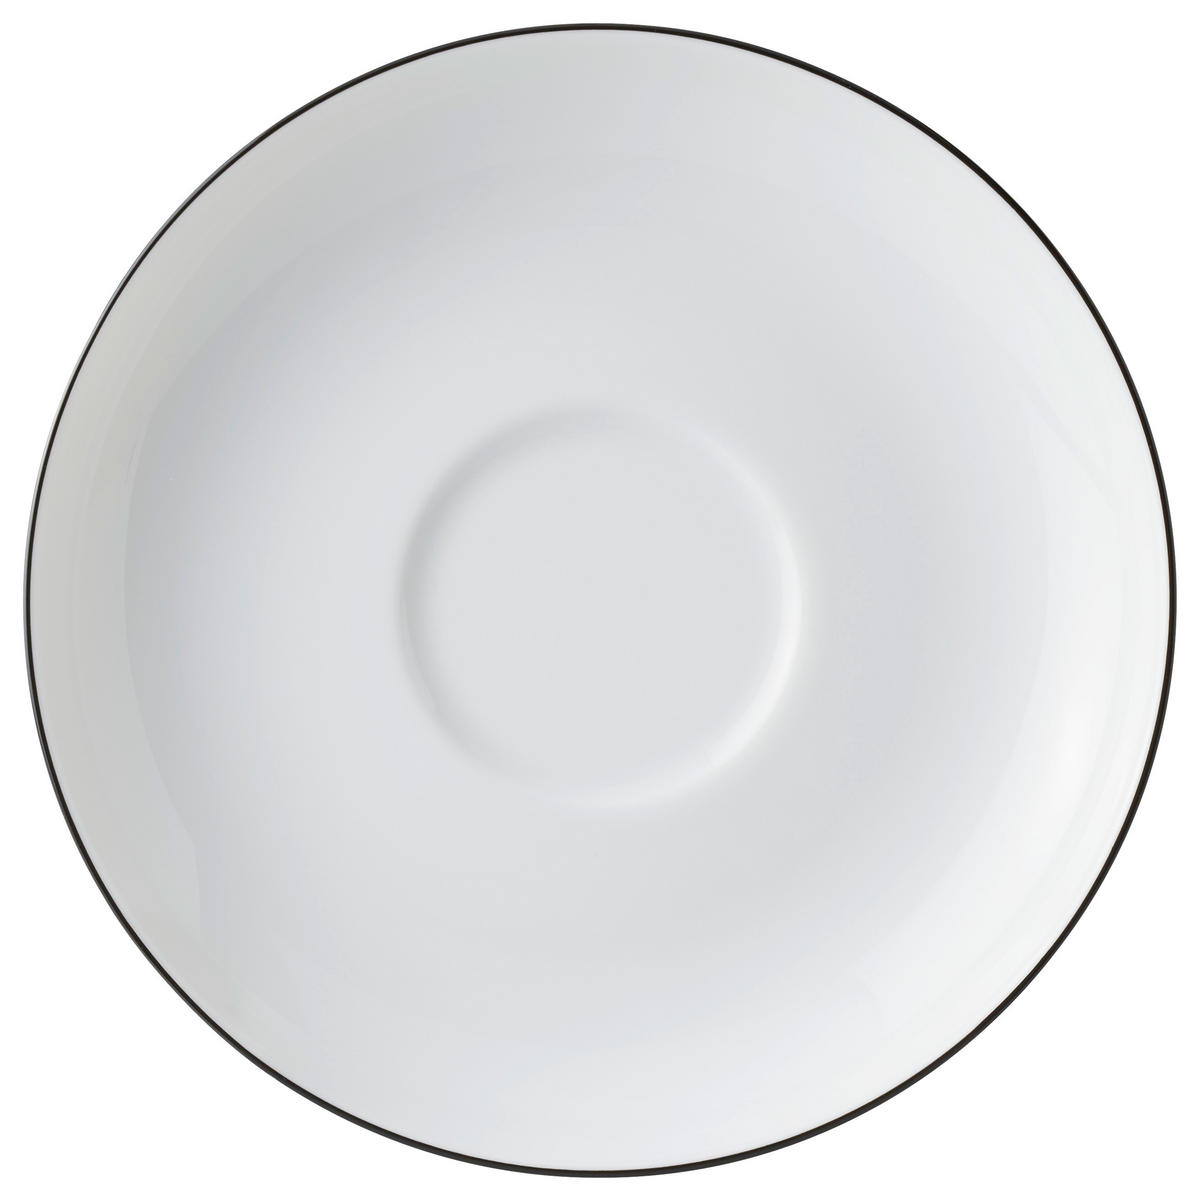 KOMBI SERVIS    30-dijelni   - bijela/crna, Basics, keramika - Seltmann Weiden